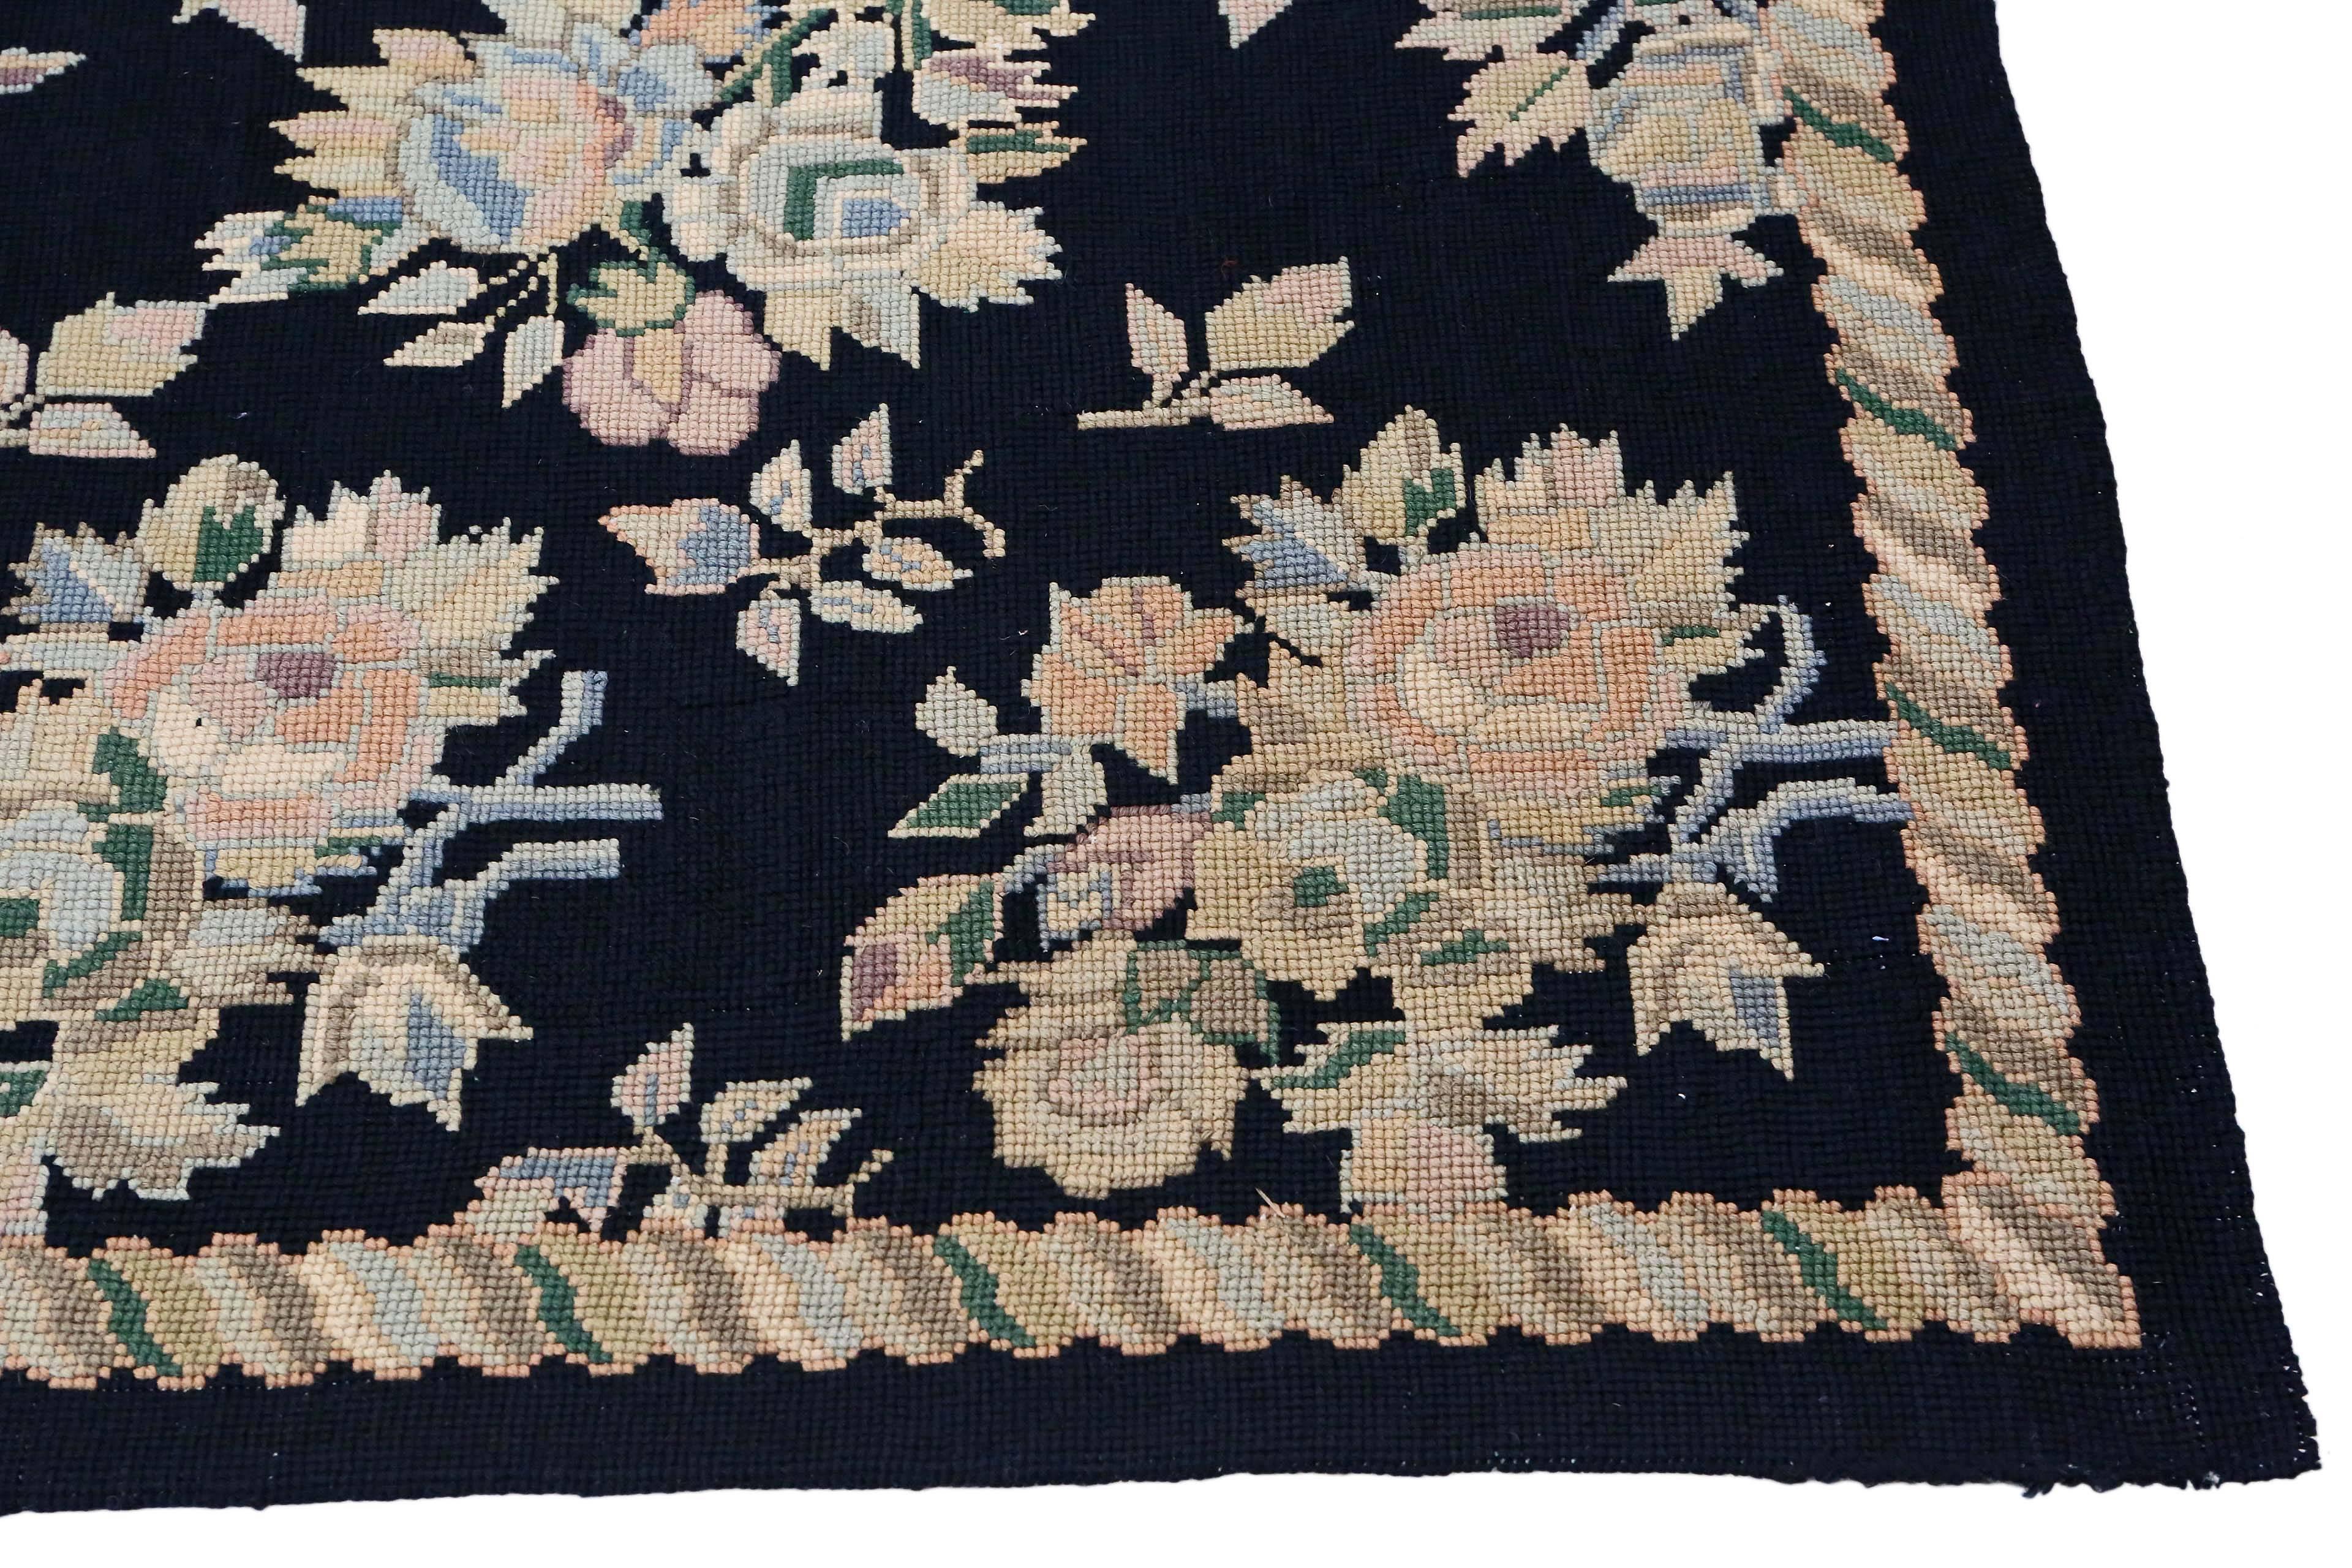 Antique large quality William Morris Style needlepoint rug carpet. Measures: 8'6